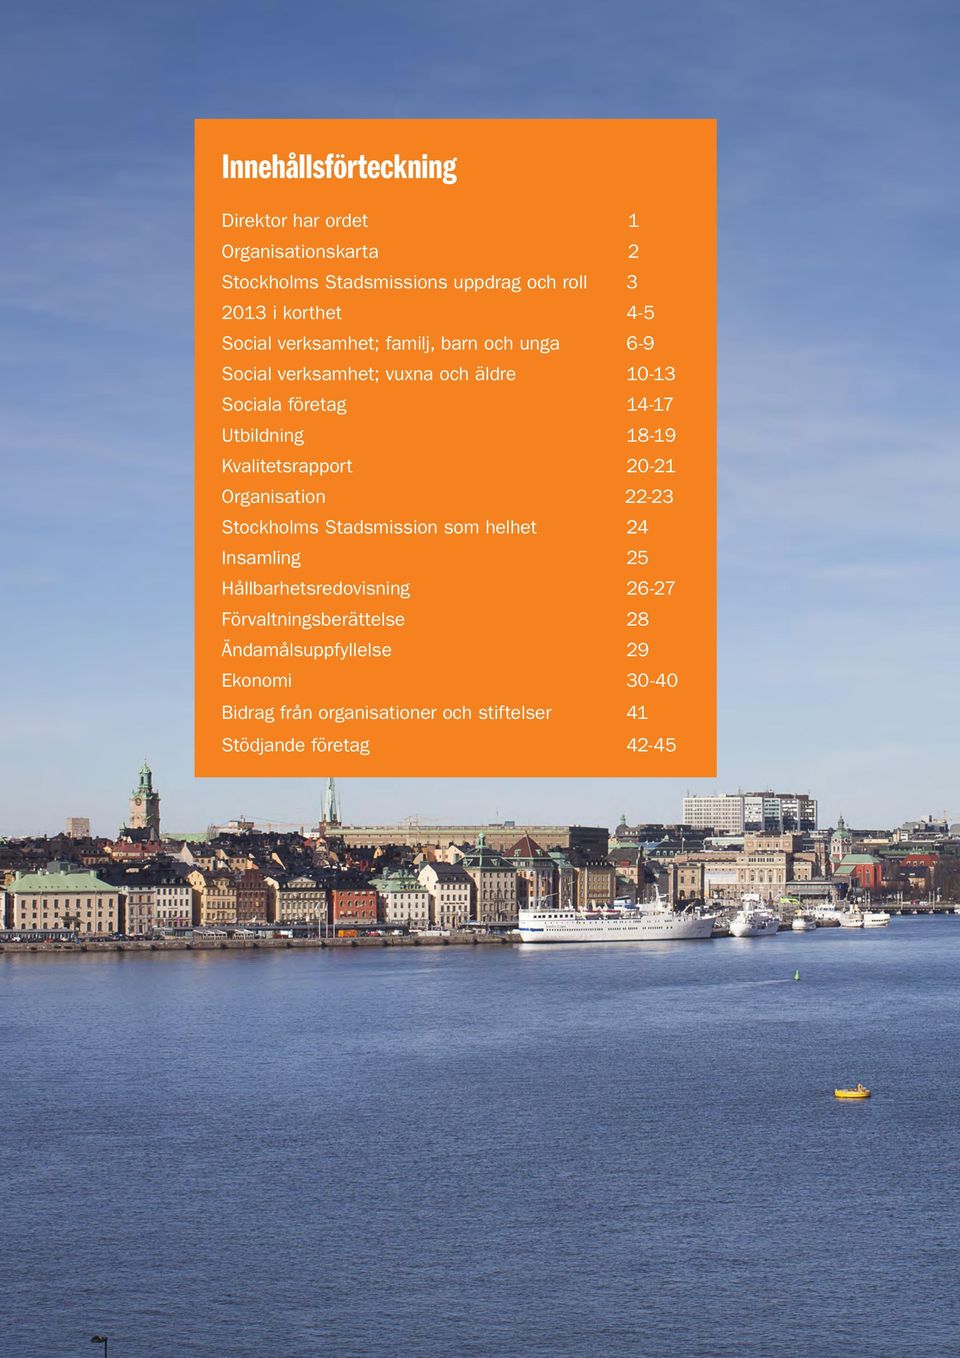 Kvalitetsrapport 20-21 Organisation 22-23 Stockholms Stadsmission som helhet 24 Insamling 25 Hållbarhetsredovisning 26-27